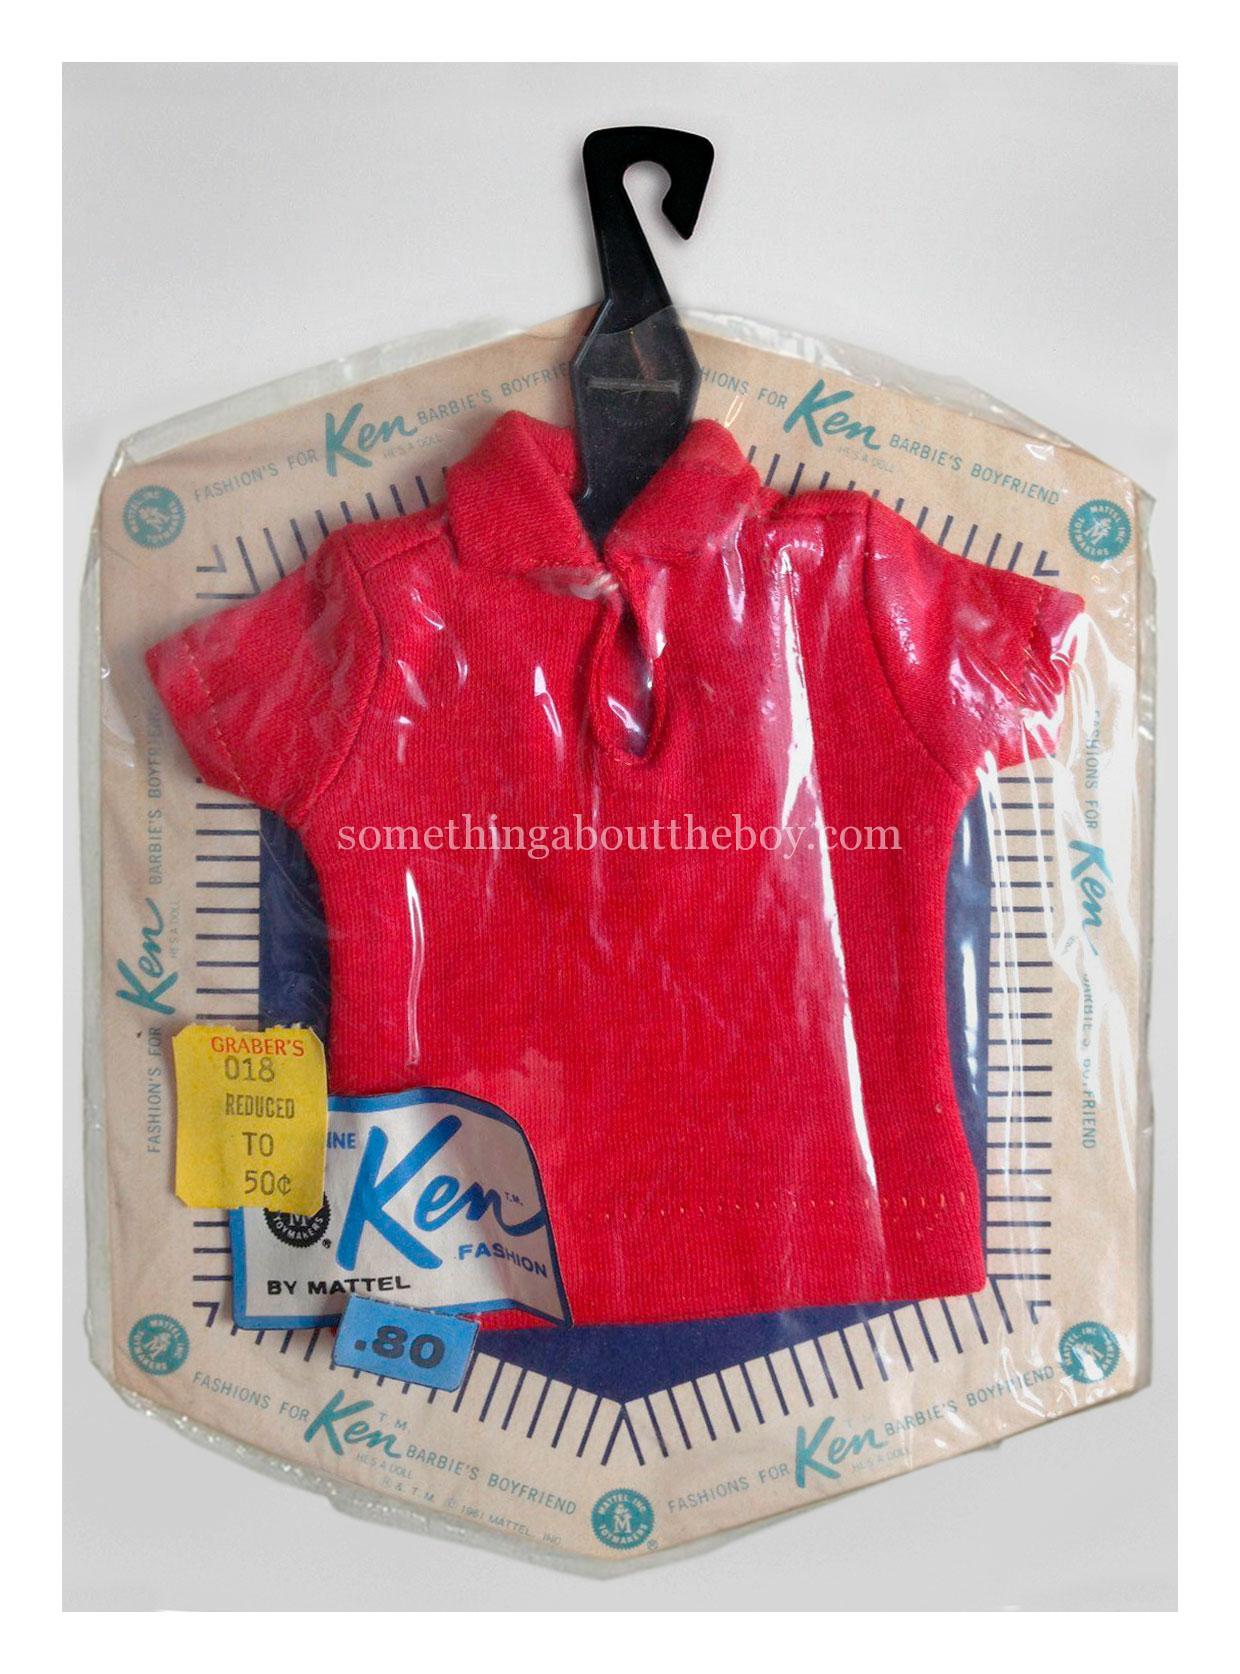 1962 Polo Shirt in original packaging